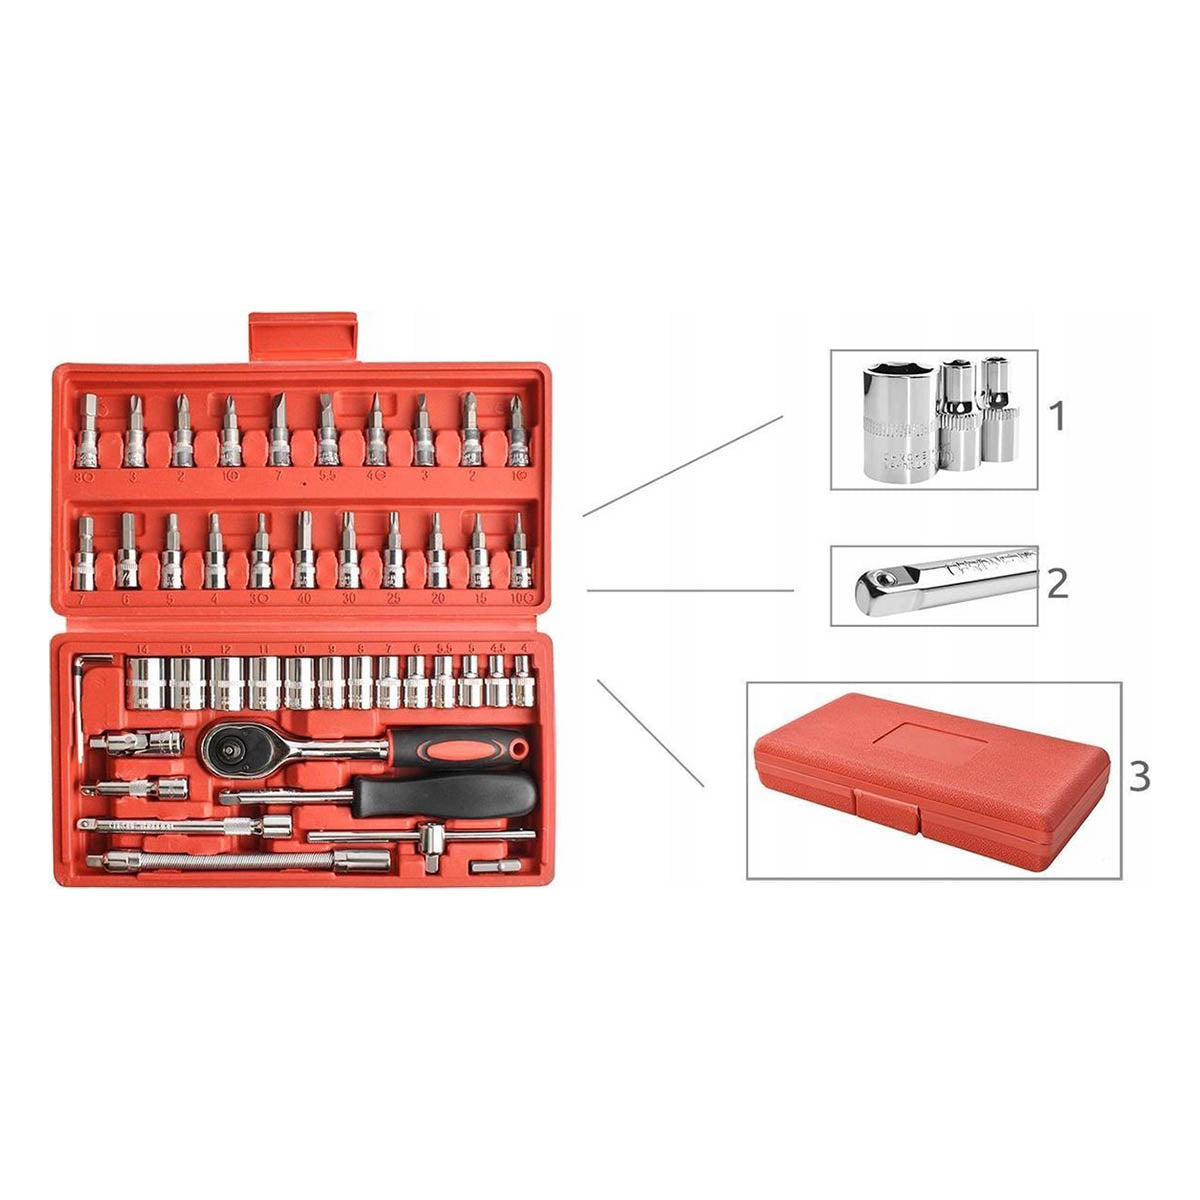 <tc>Ariko</tc> Professional Socket wrench set - 46 Piece - Socket Set - Incl storage box